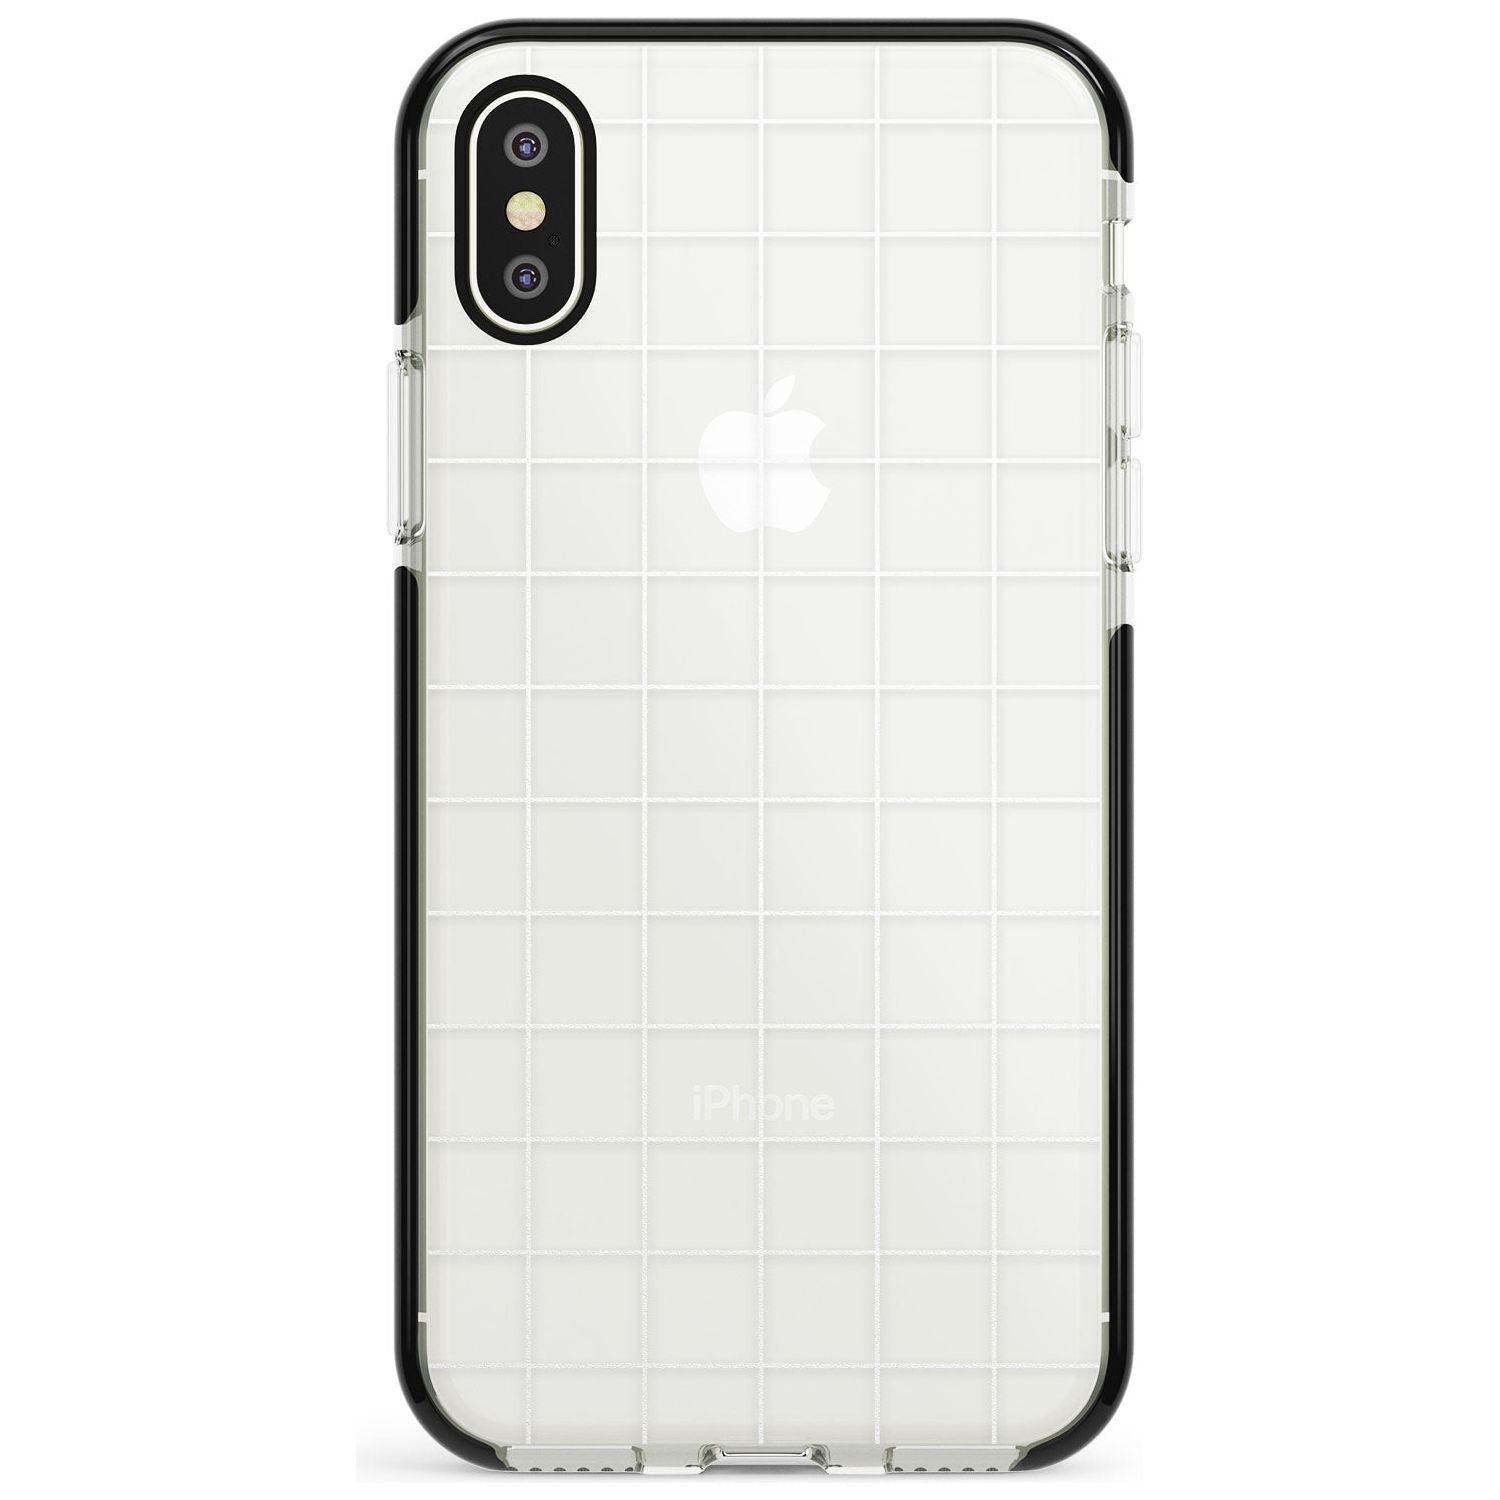 Simplistic Large Grid Pattern White (Transparent) Black Impact Phone Case for iPhone X XS Max XR